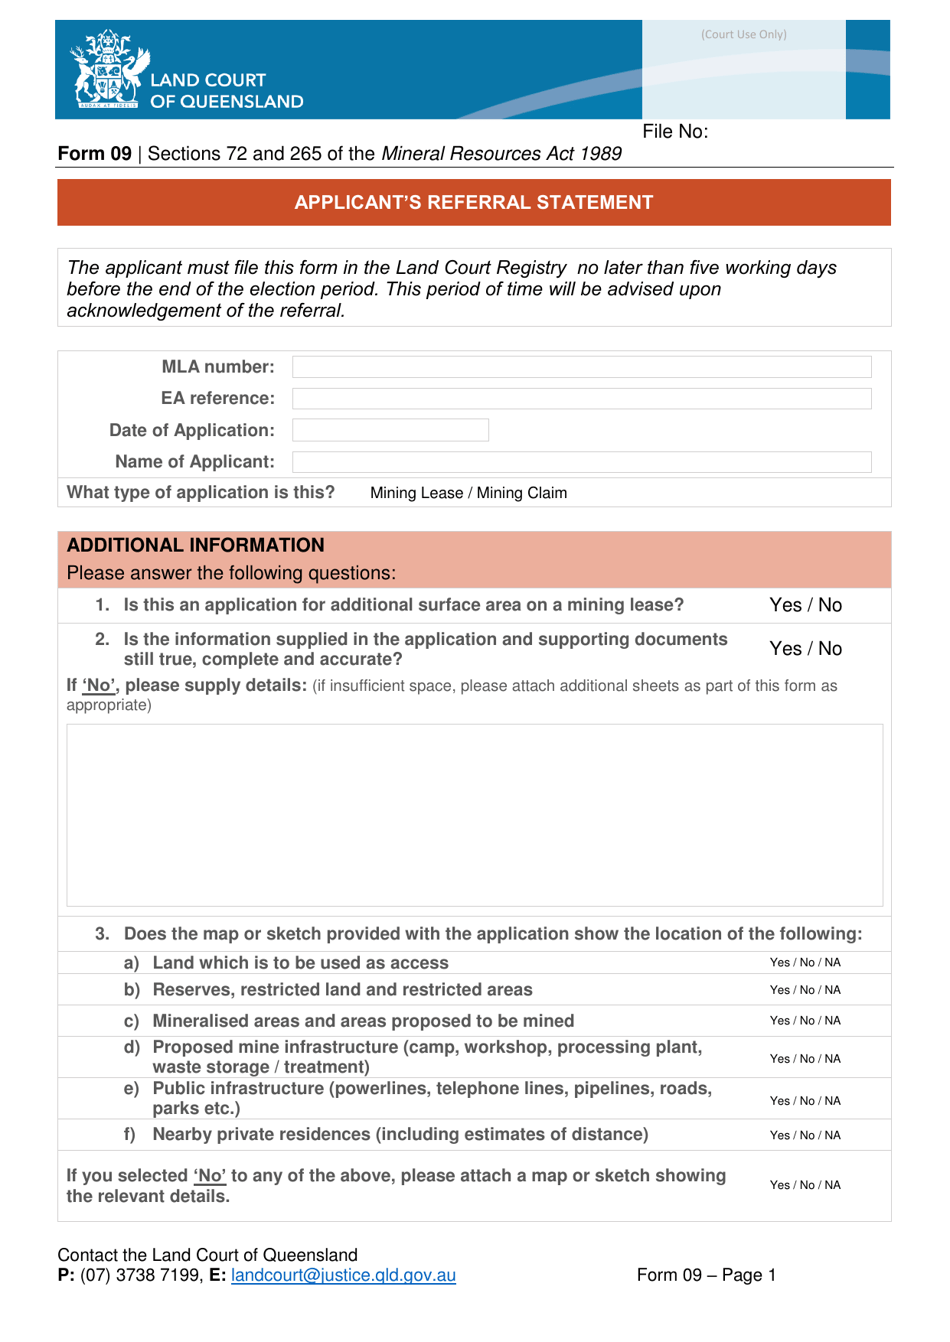 Form 09 Applicants Referral Statement - Queensland, Australia, Page 1